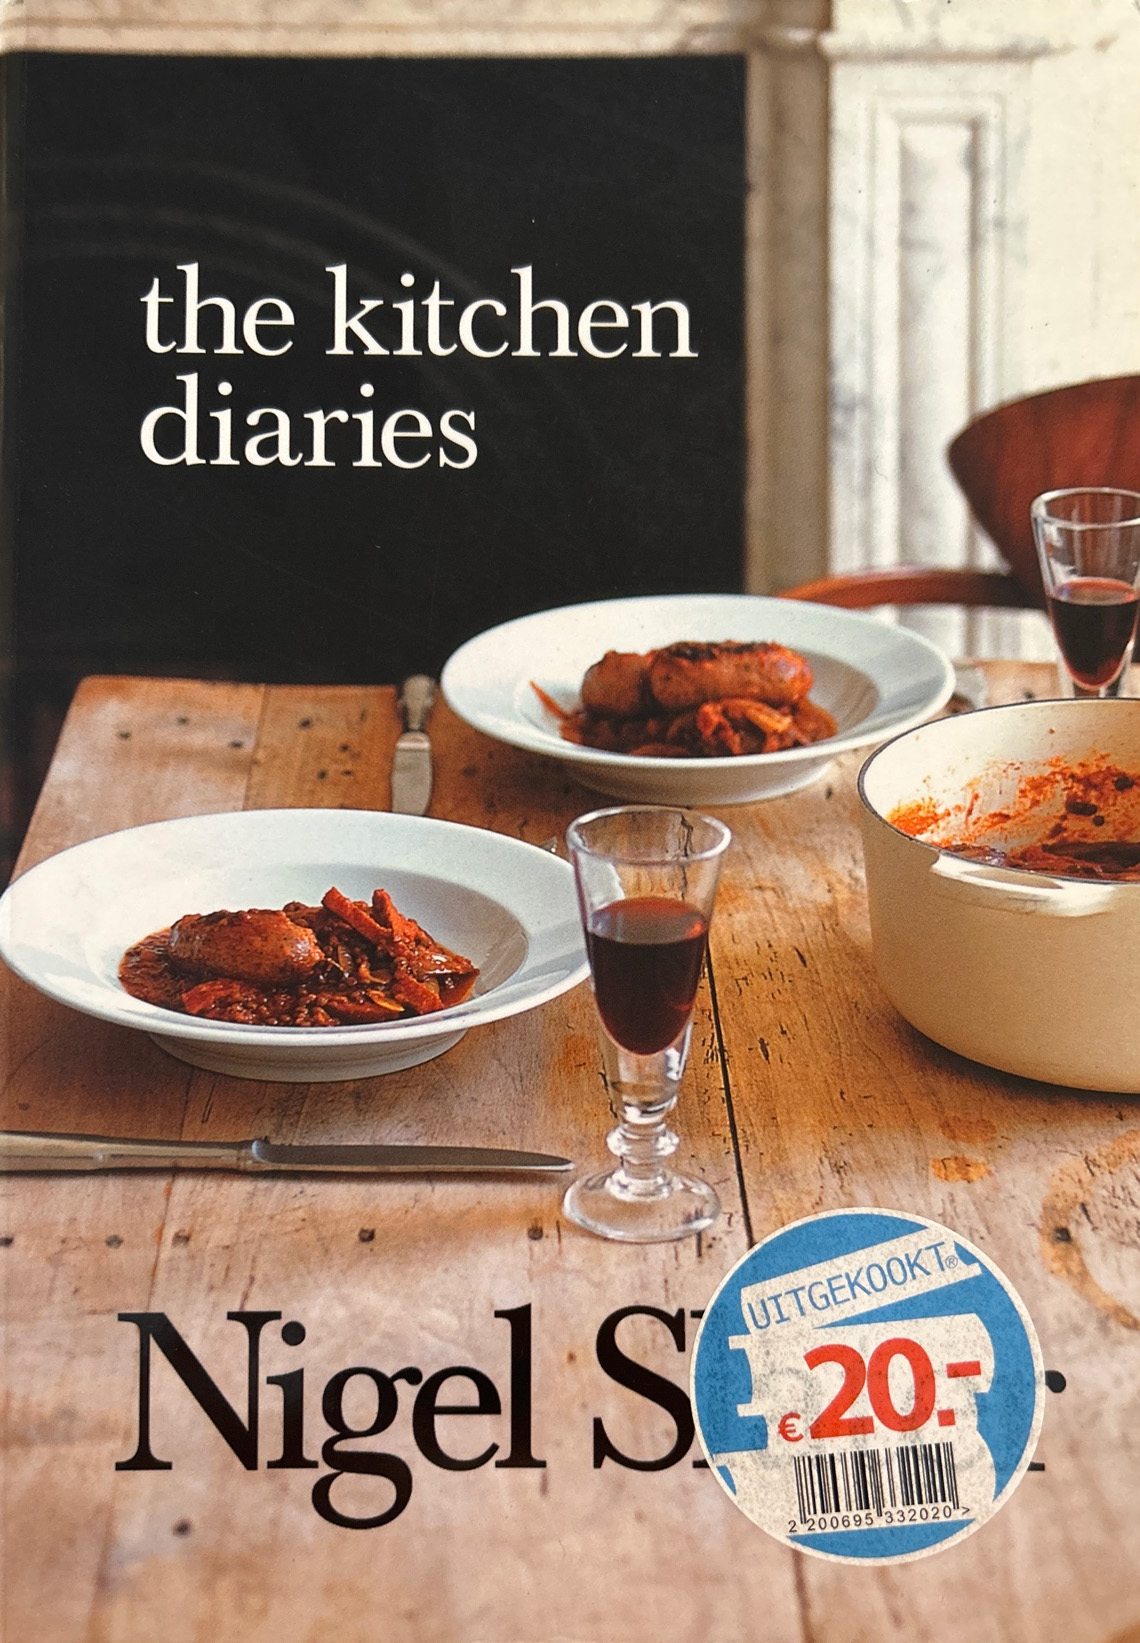 The kitchen diaries – Nigel Slater